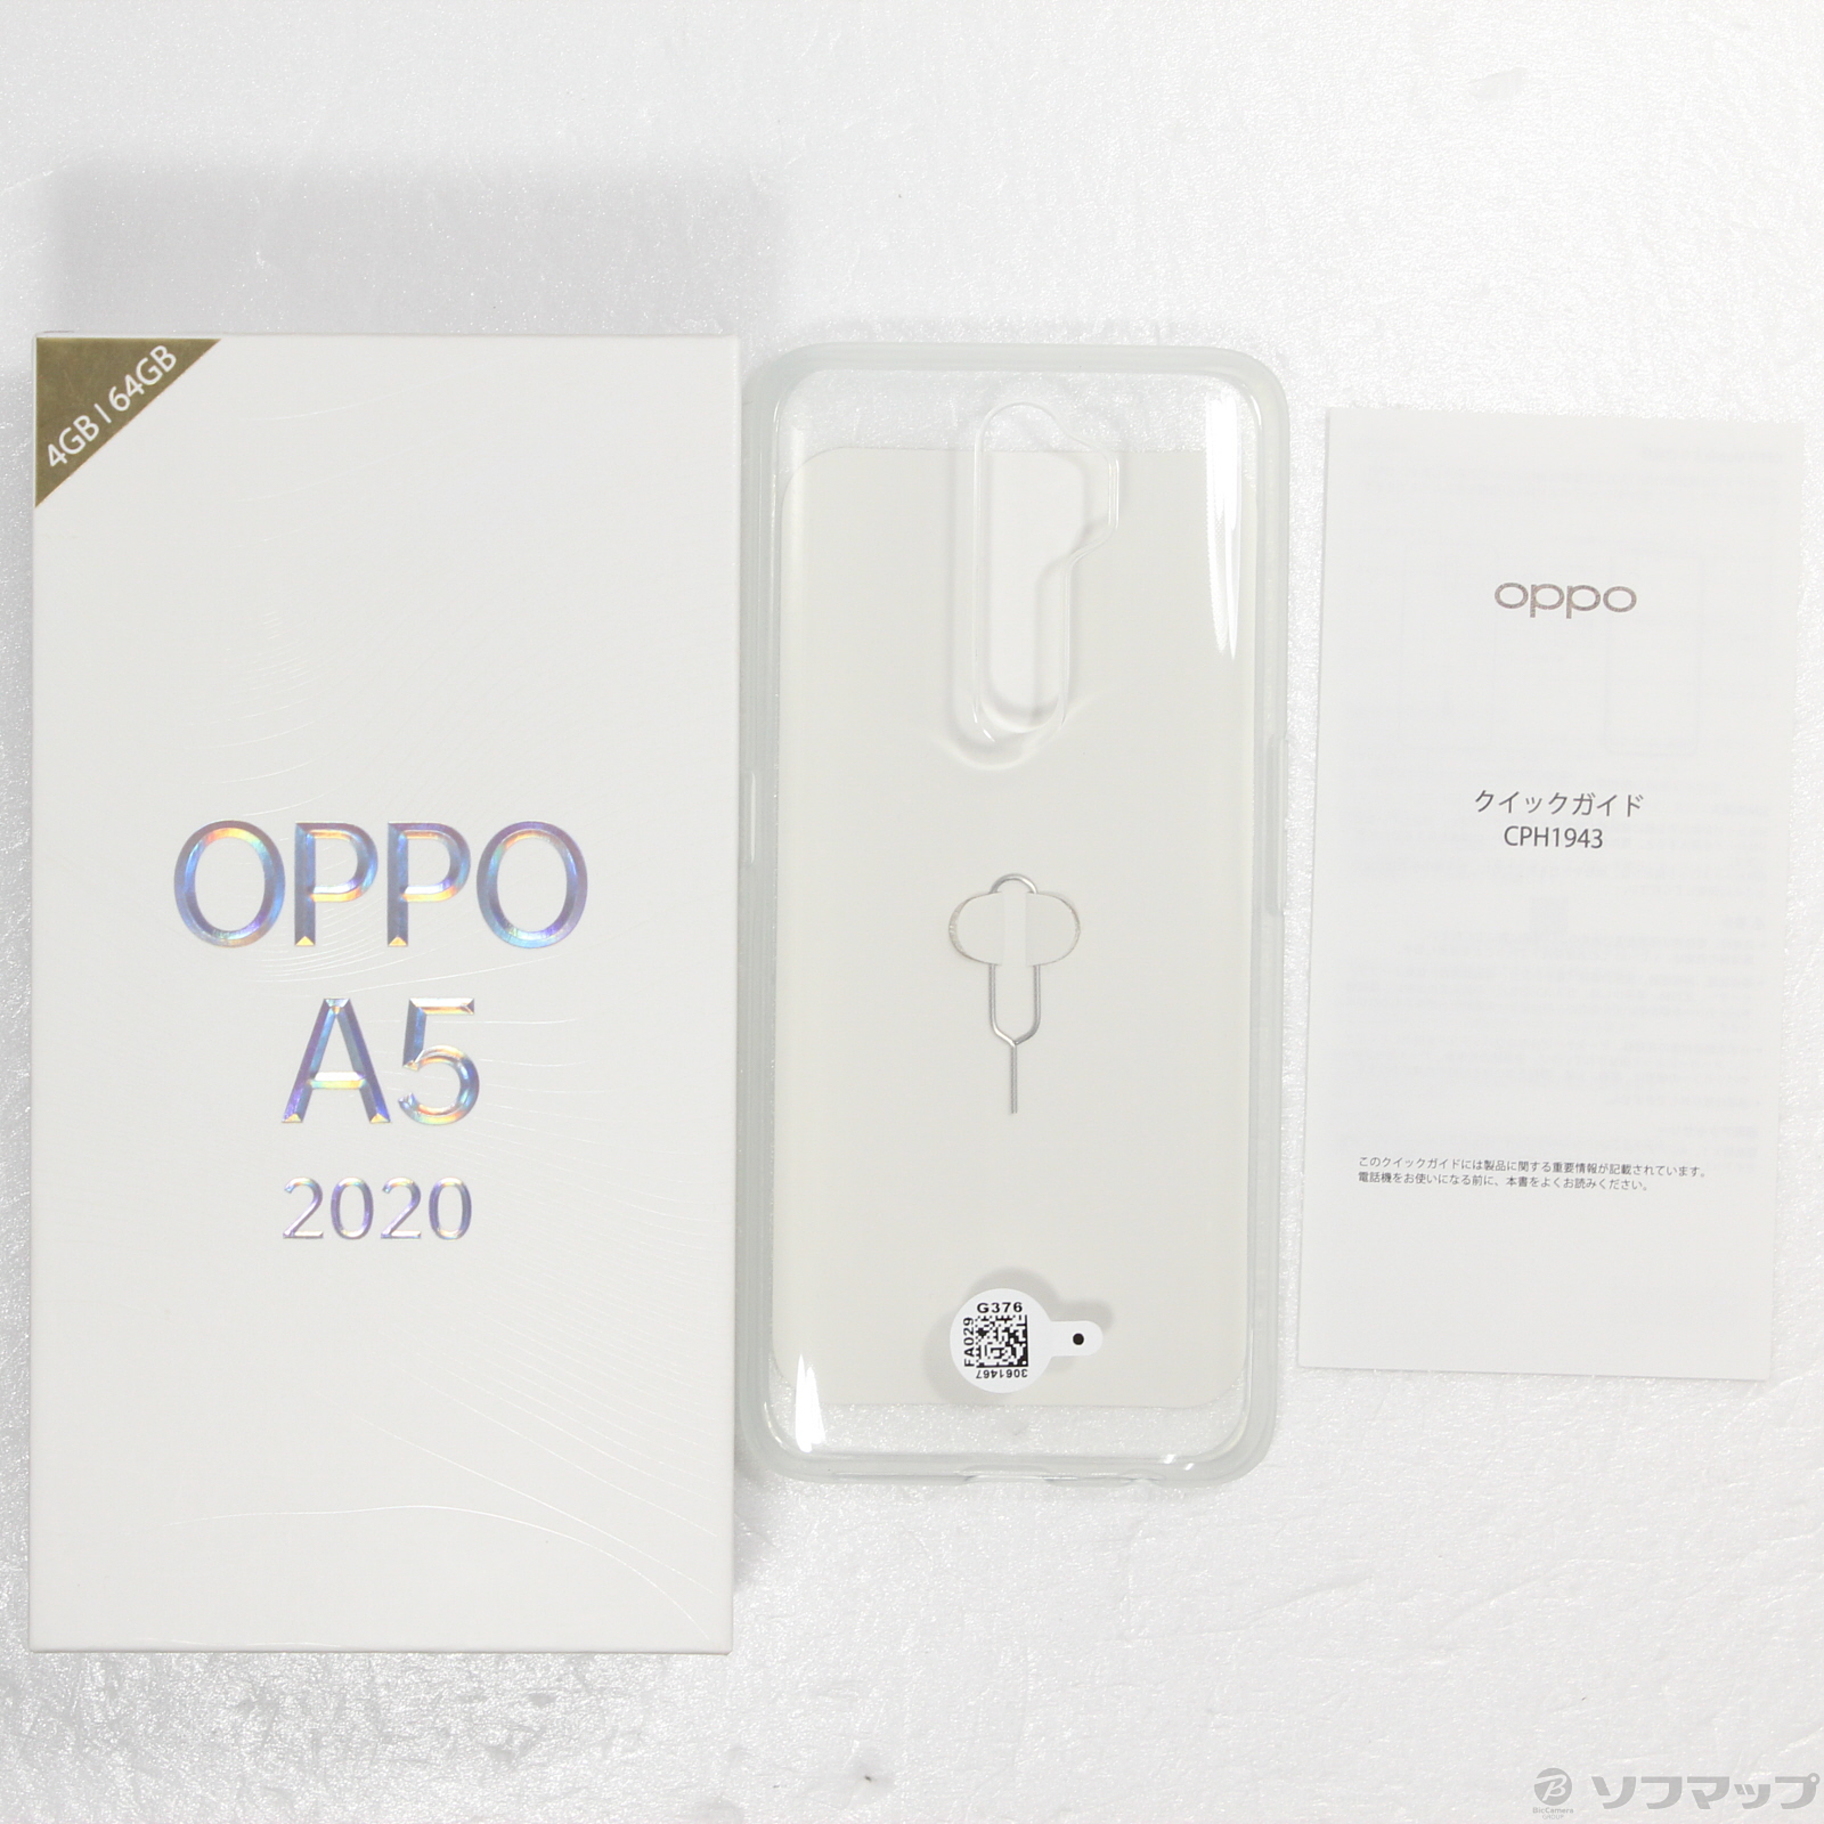 OPPO機種対応機種OPPO A5 2020 グリーン 4GB/64GB CPH1943